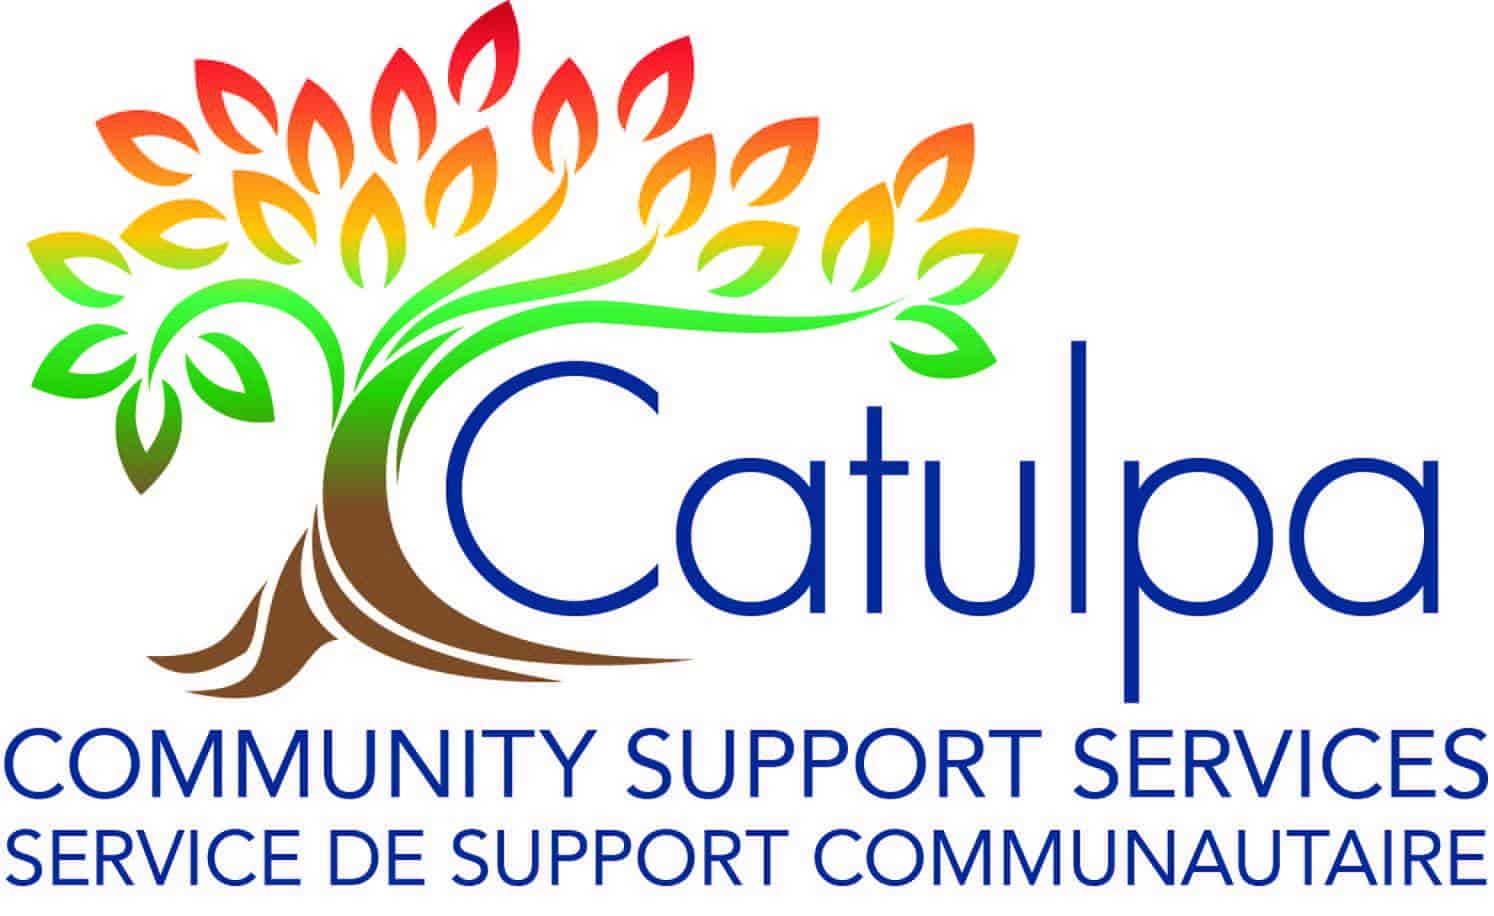 Catulpa Community Support Services